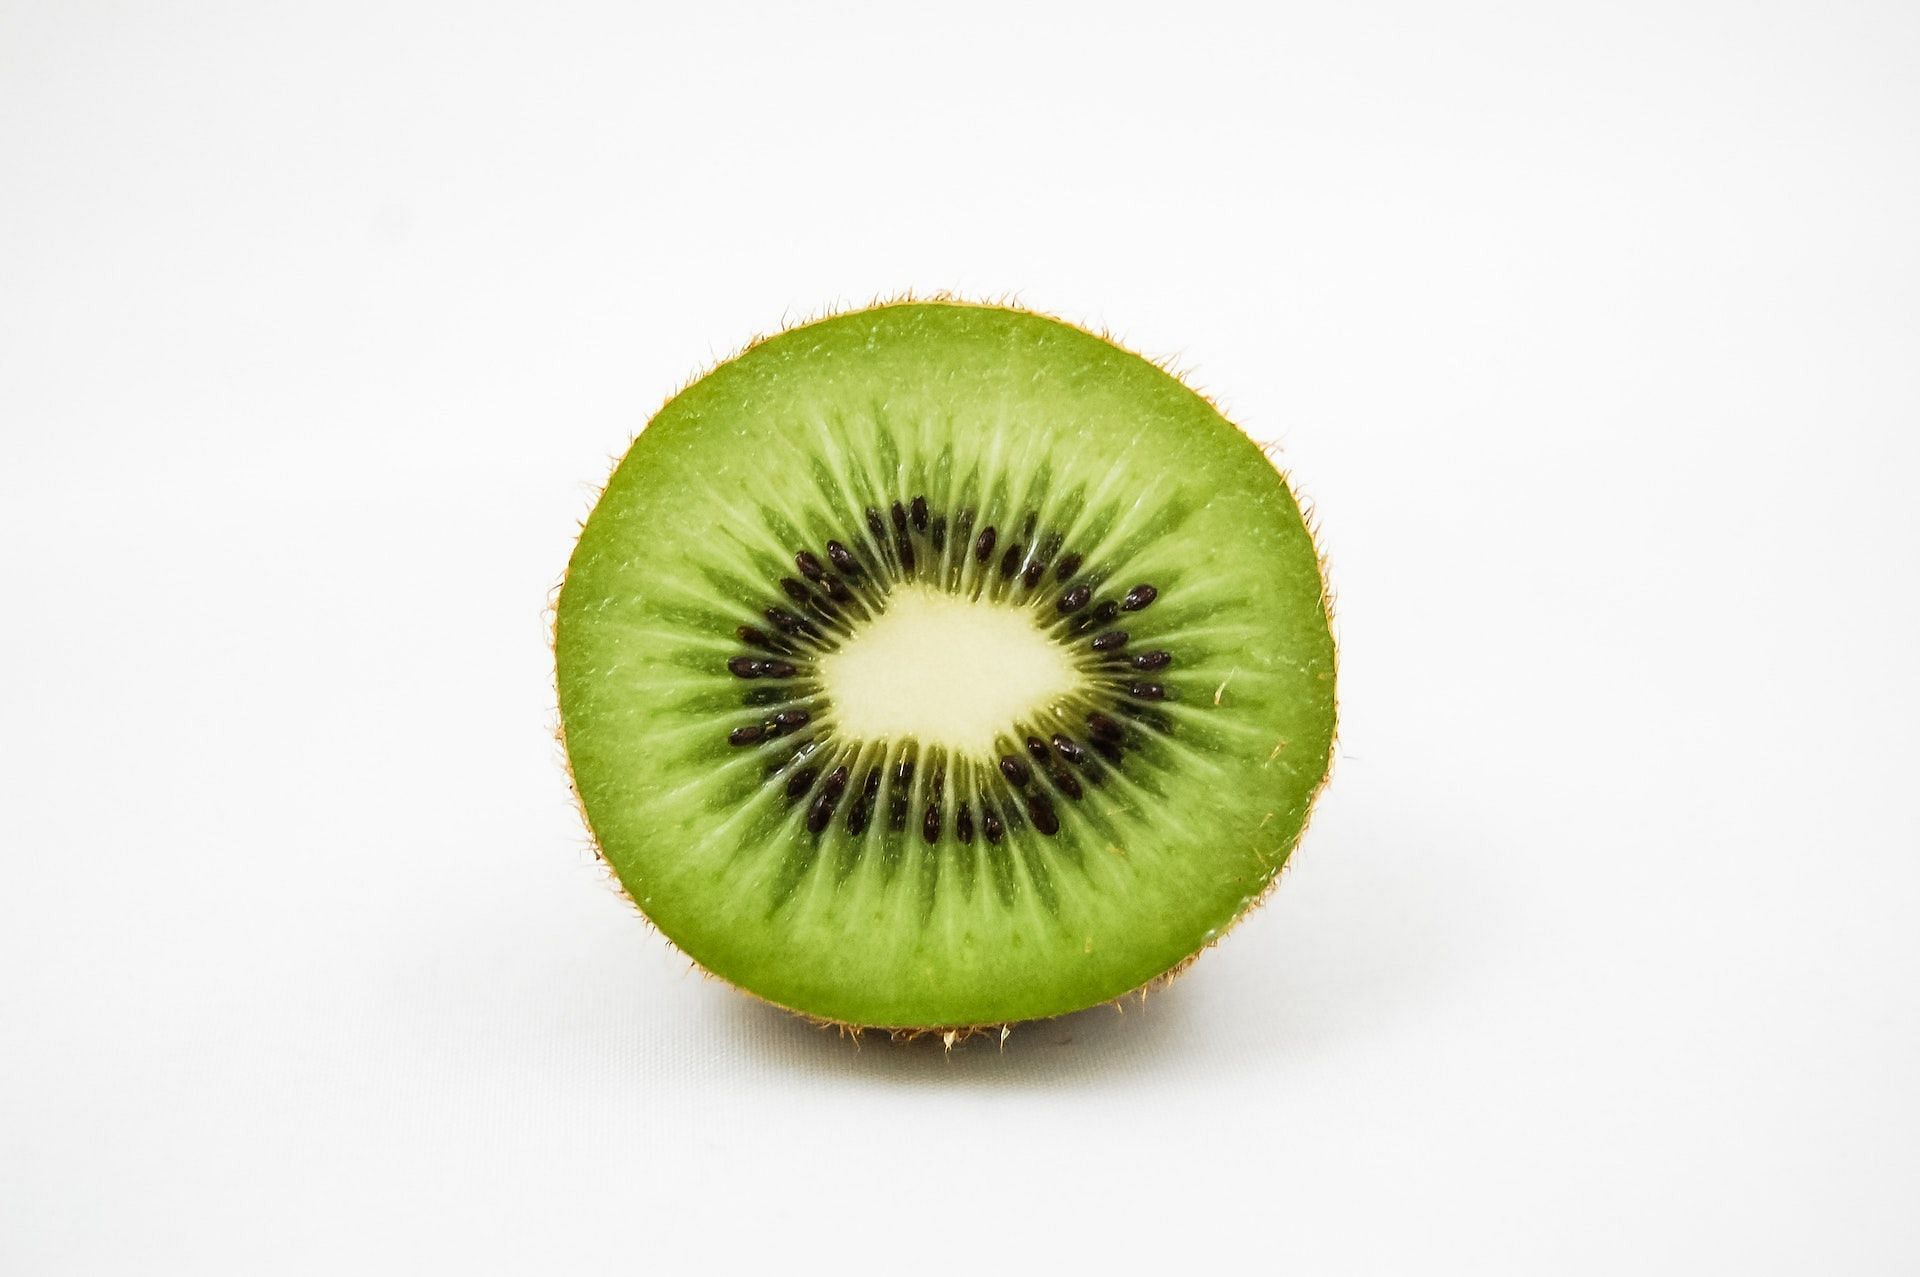 Kiwis are rich in vitamin C. (Image via Pexels/Pixabay)